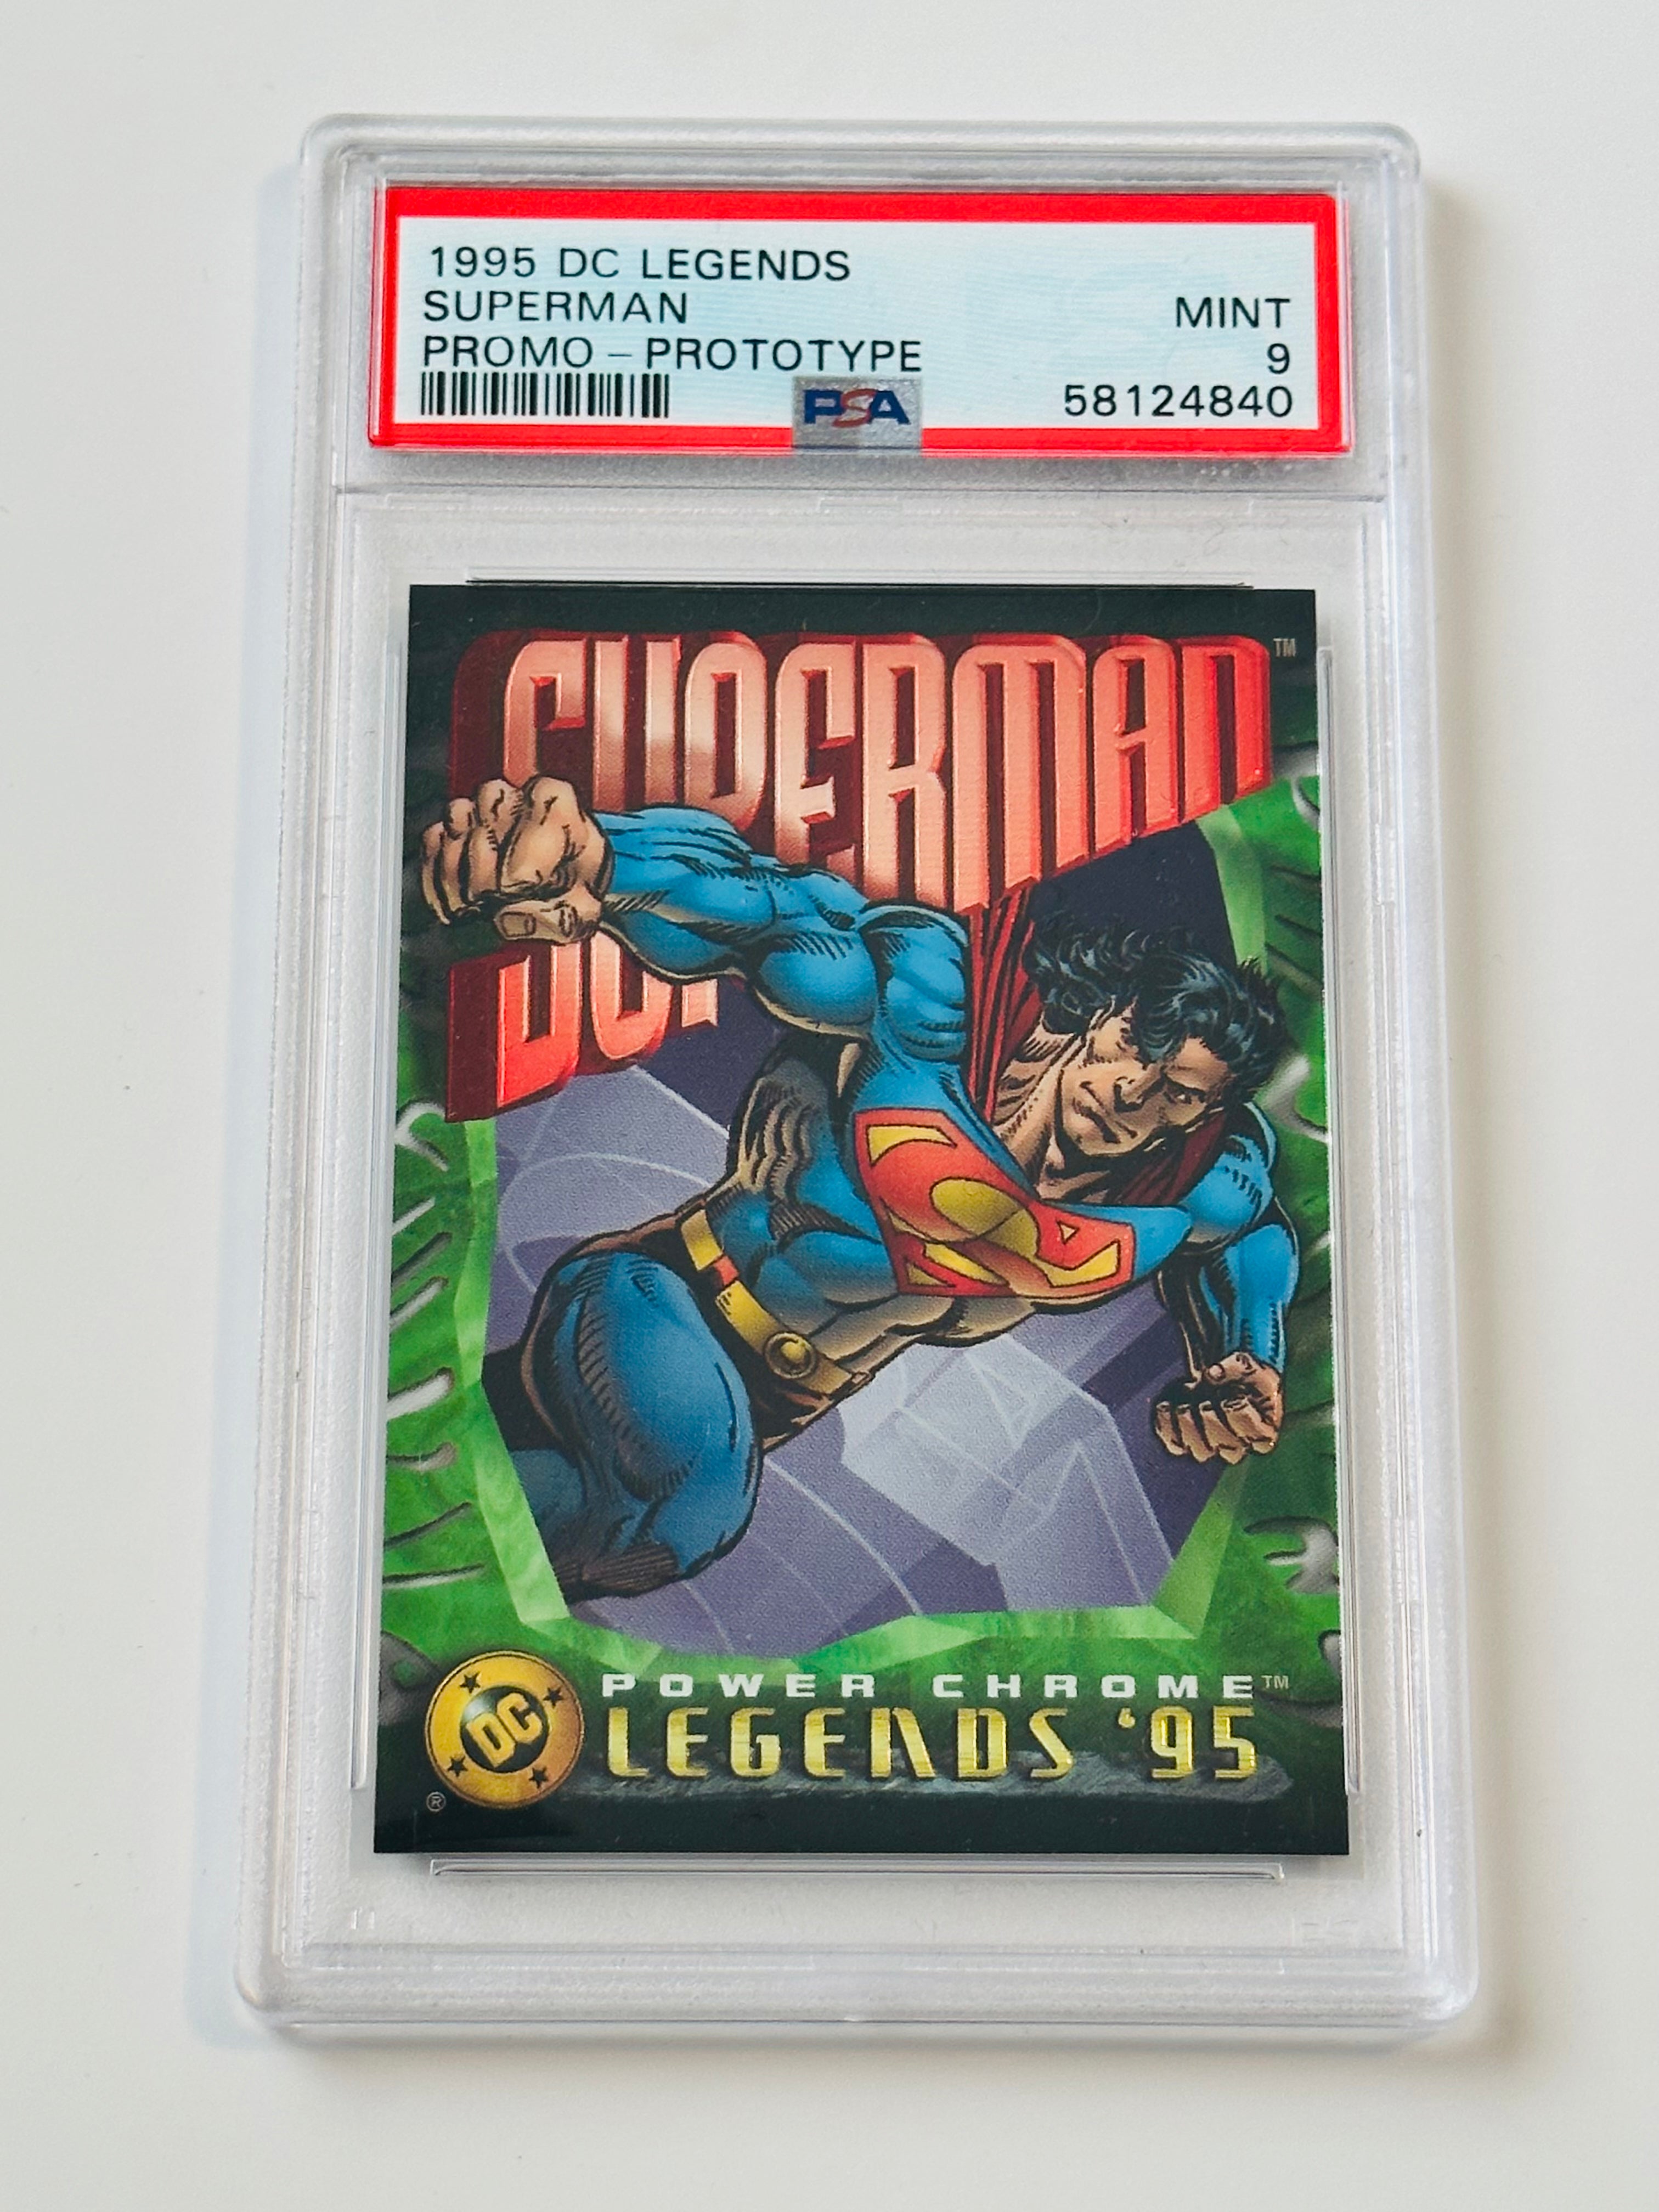 Superman DC Legends rare high grade PSA 9 foil promo card 1995